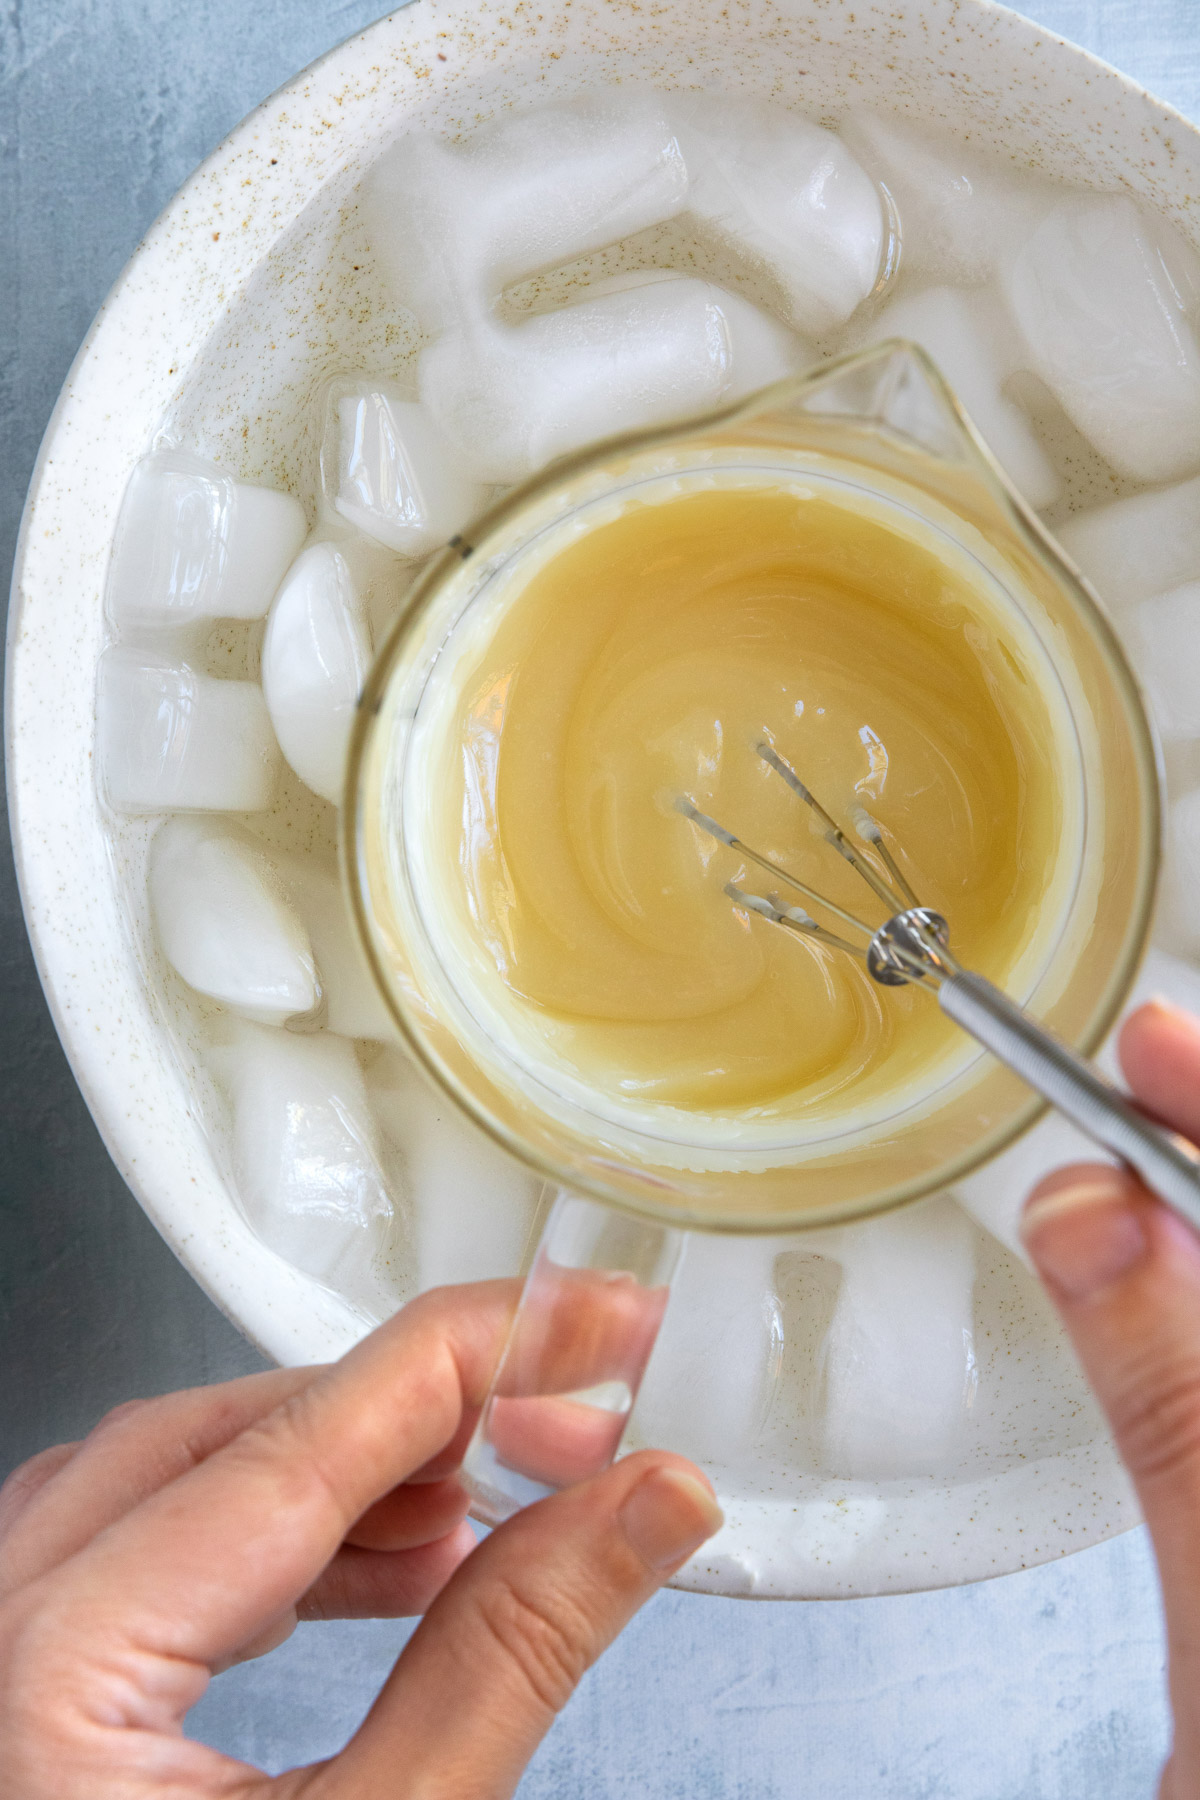 Use an ice bath to thicken serum ingredients